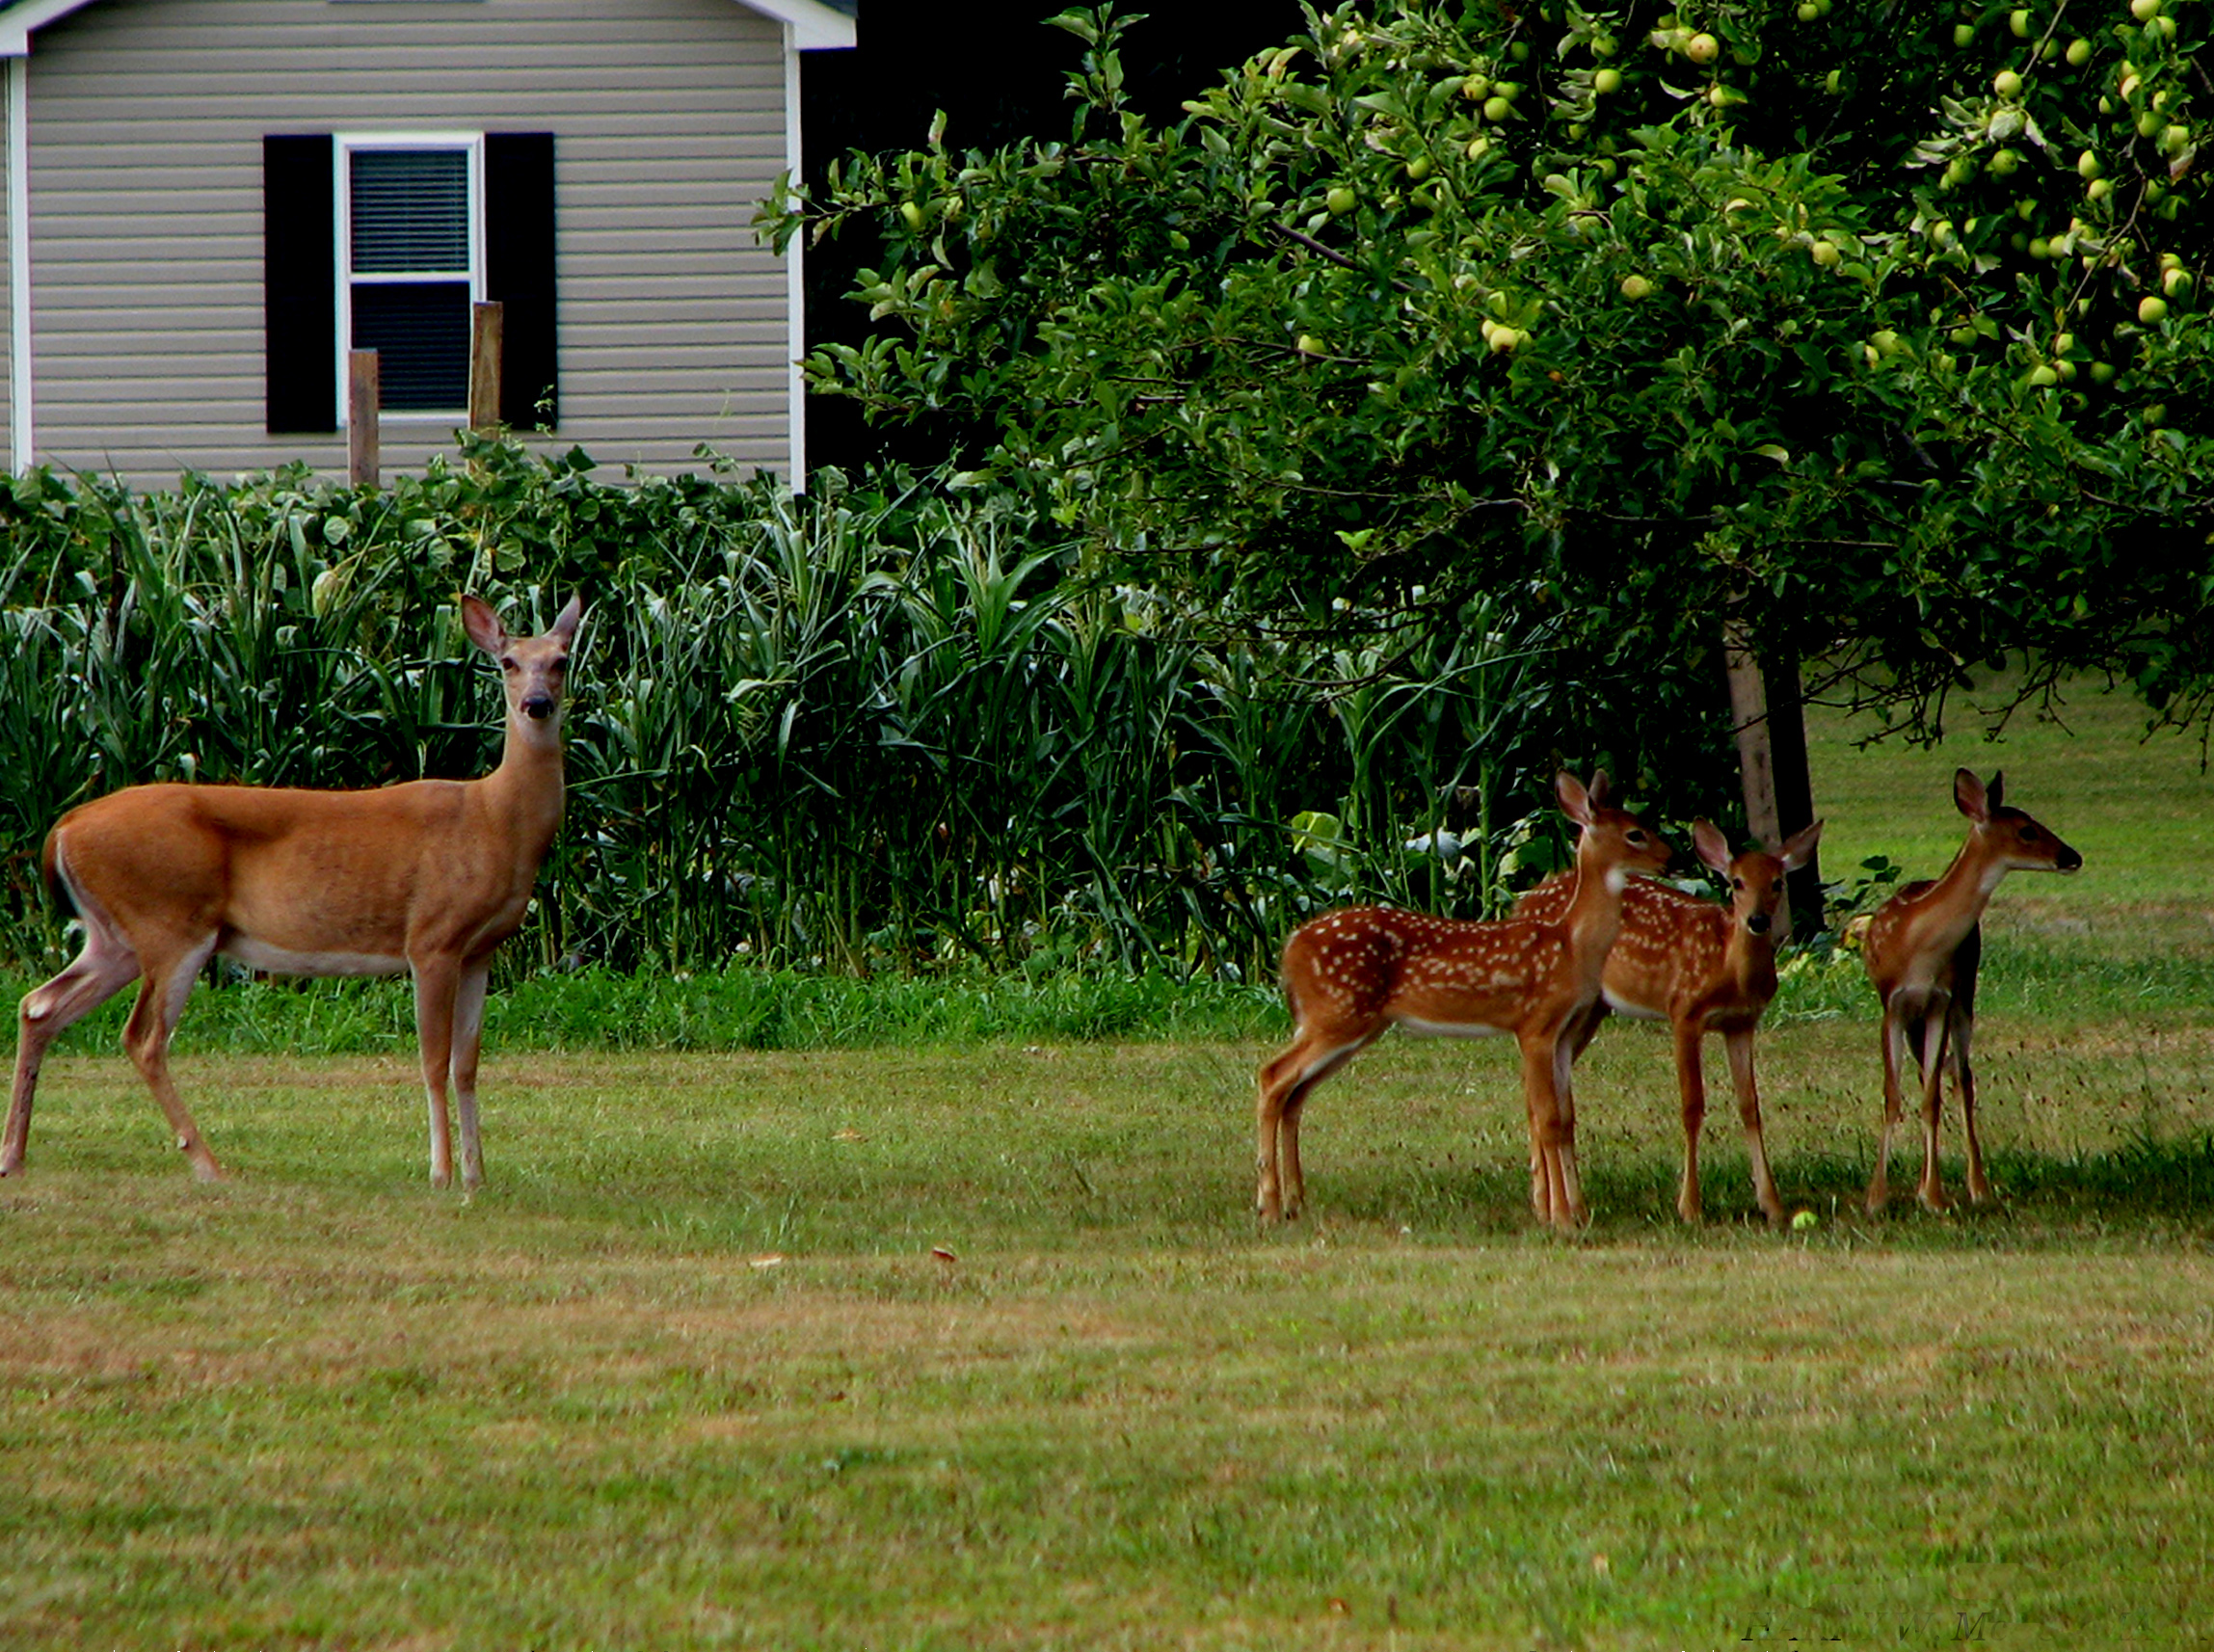 What To Feed Deer In Backyard